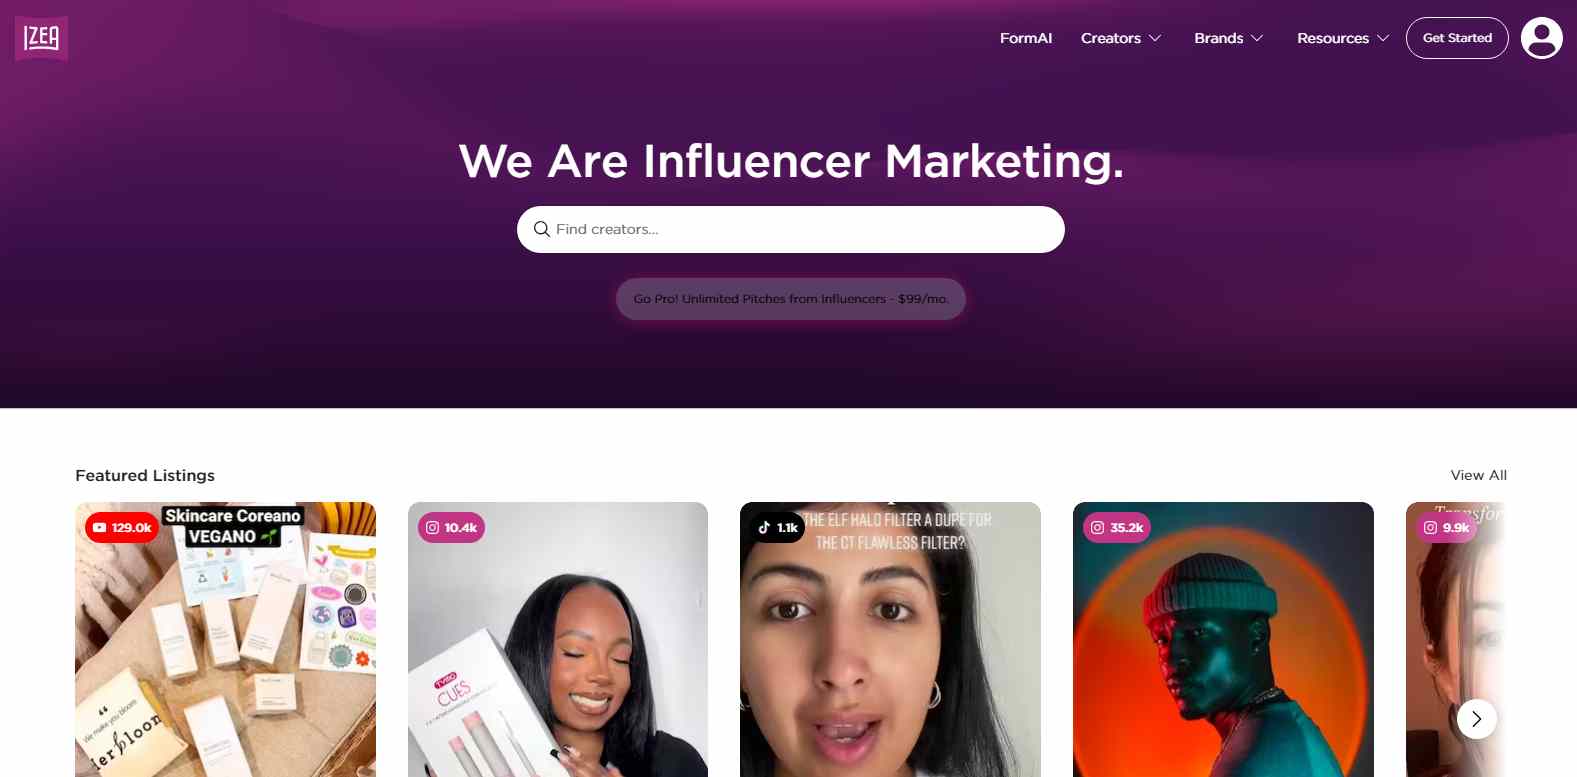 IZEA: The Top Influencer Marketing Platform